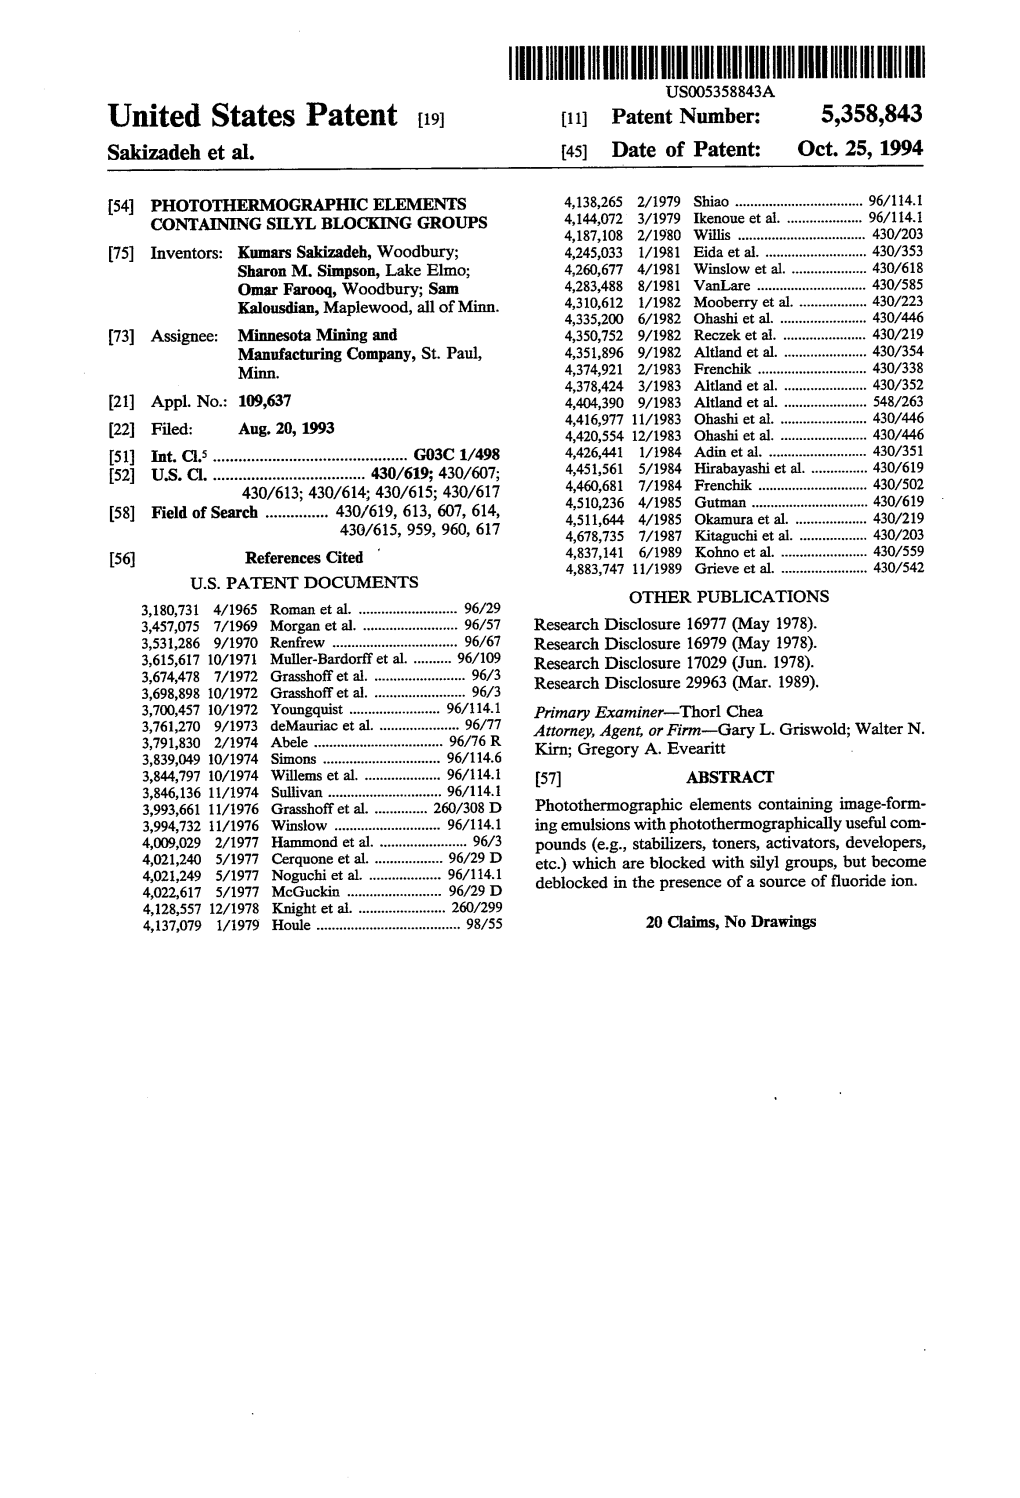 United States Patent (19) 11 Patent Number: 5,358,843 Sakizadeh Et Al